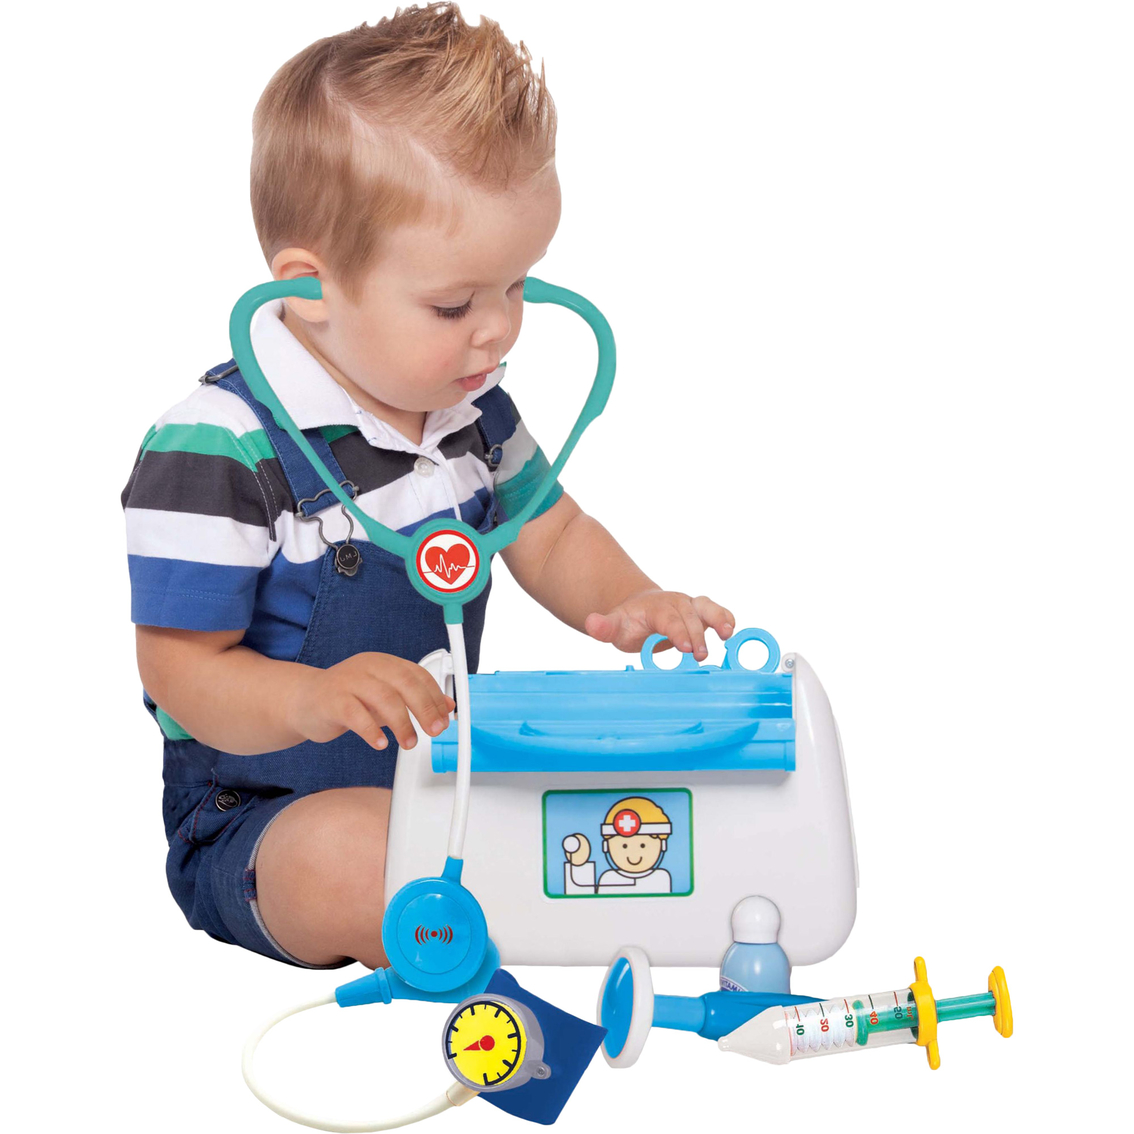 Kiddieland Toys Limited Doctor Kit - Image 3 of 3